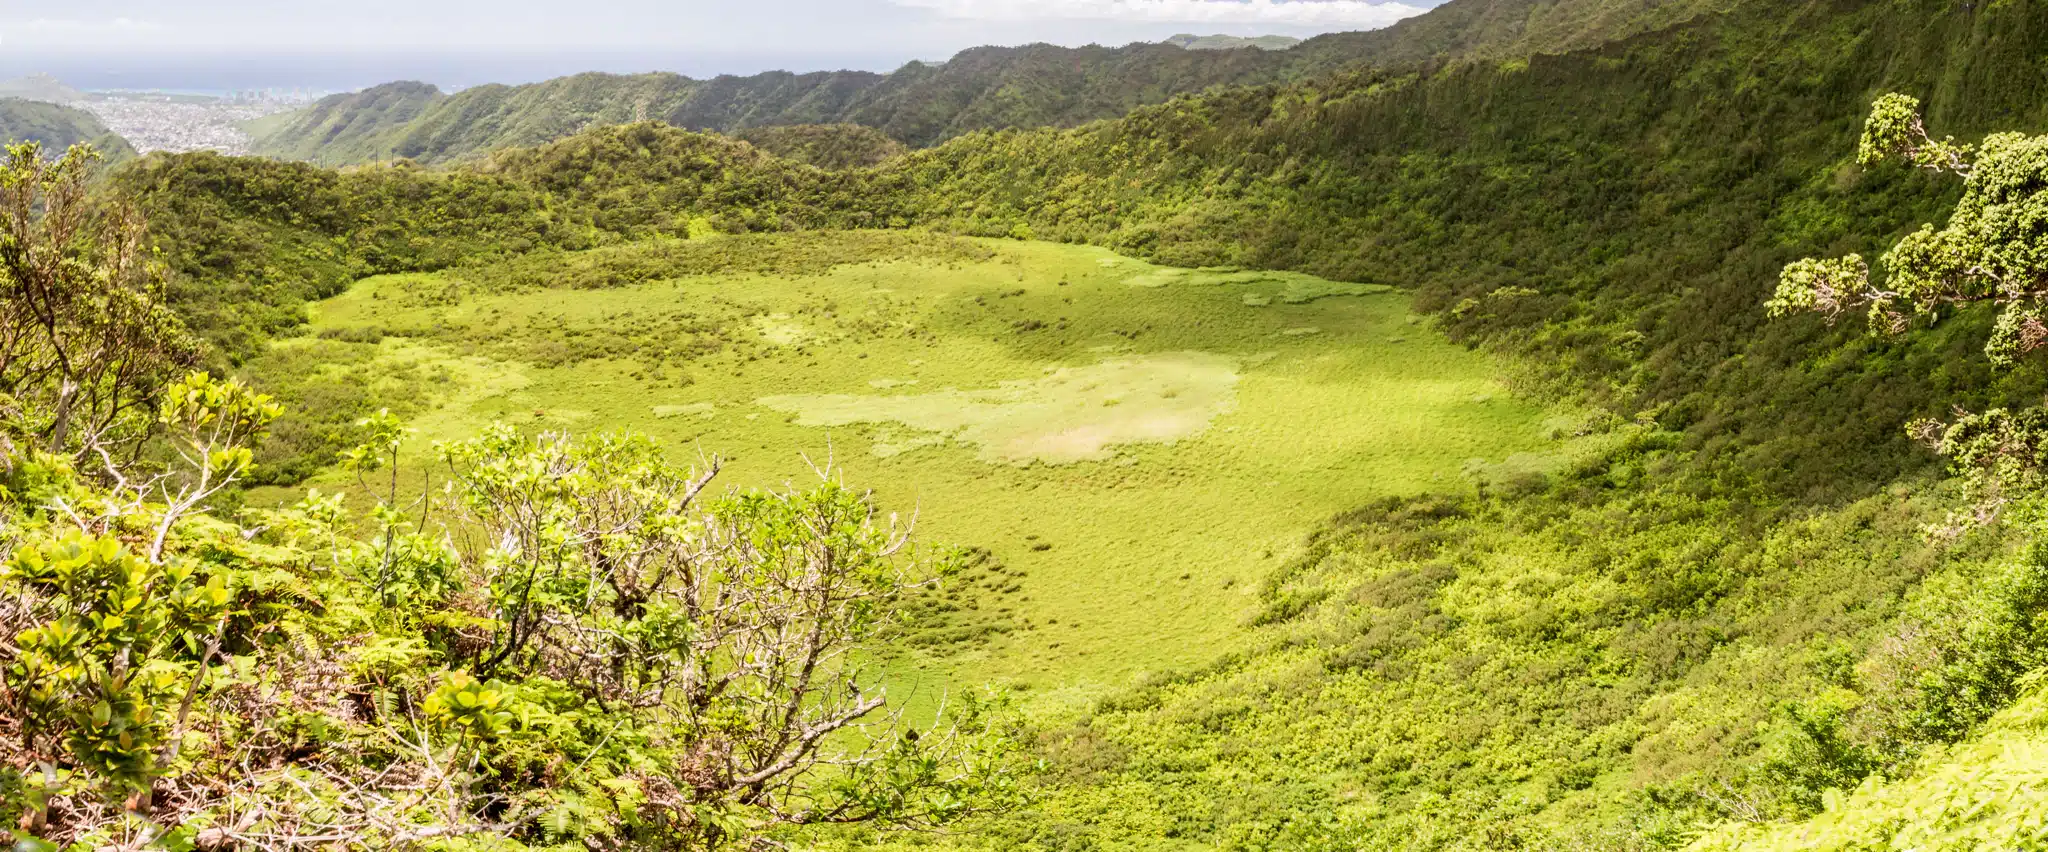 Ka'au Crater Hike is a Hiking Trail located in the city of Honolulu on Oahu, Hawaii